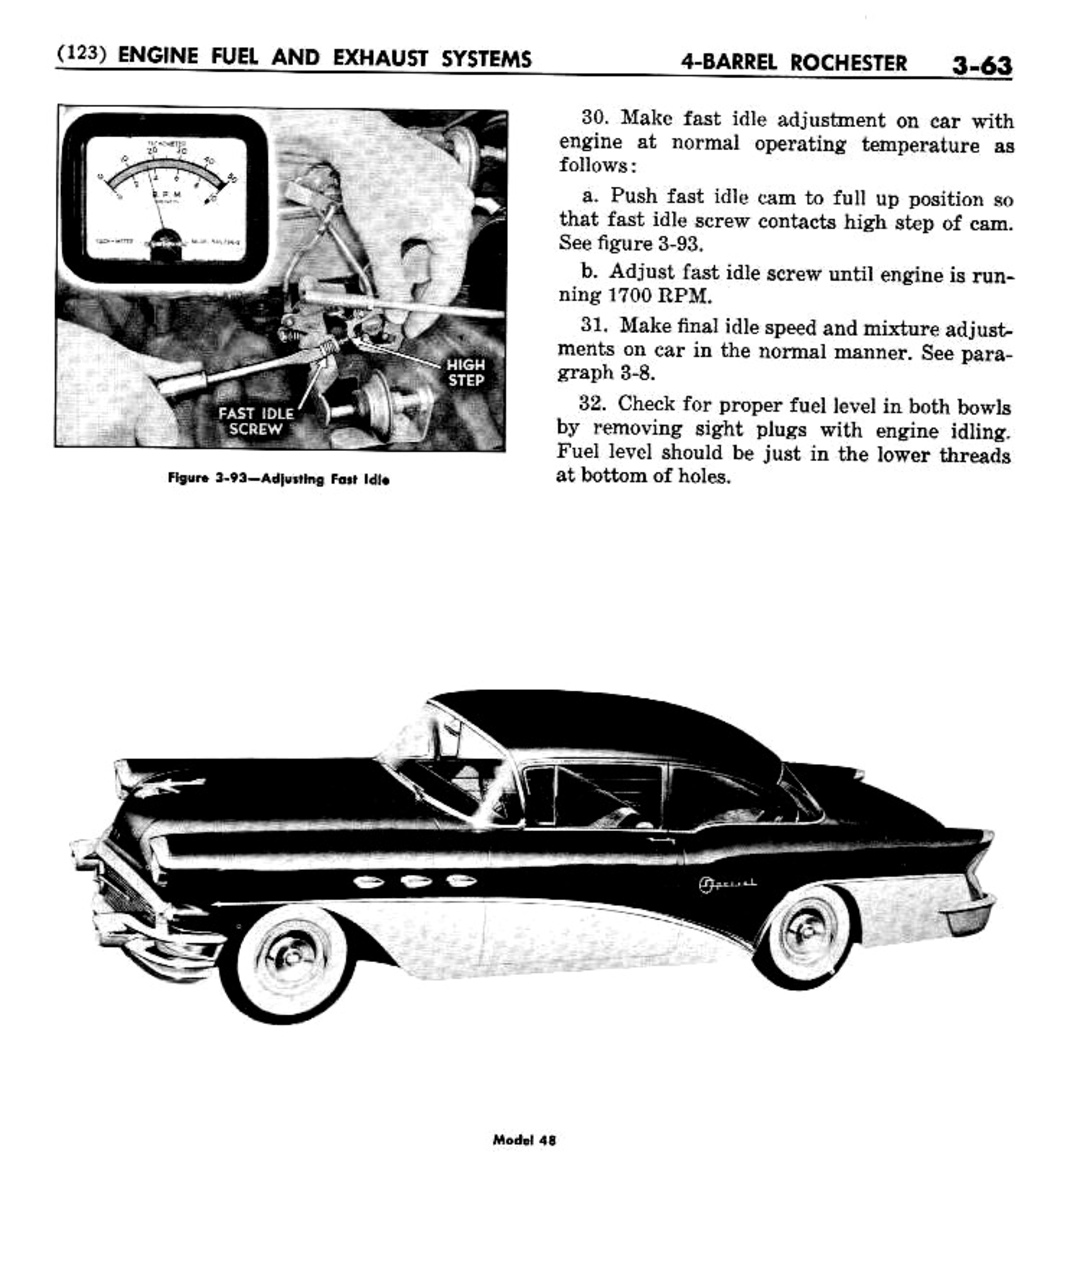 n_04 1956 Buick Shop Manual - Engine Fuel & Exhaust-063-063.jpg